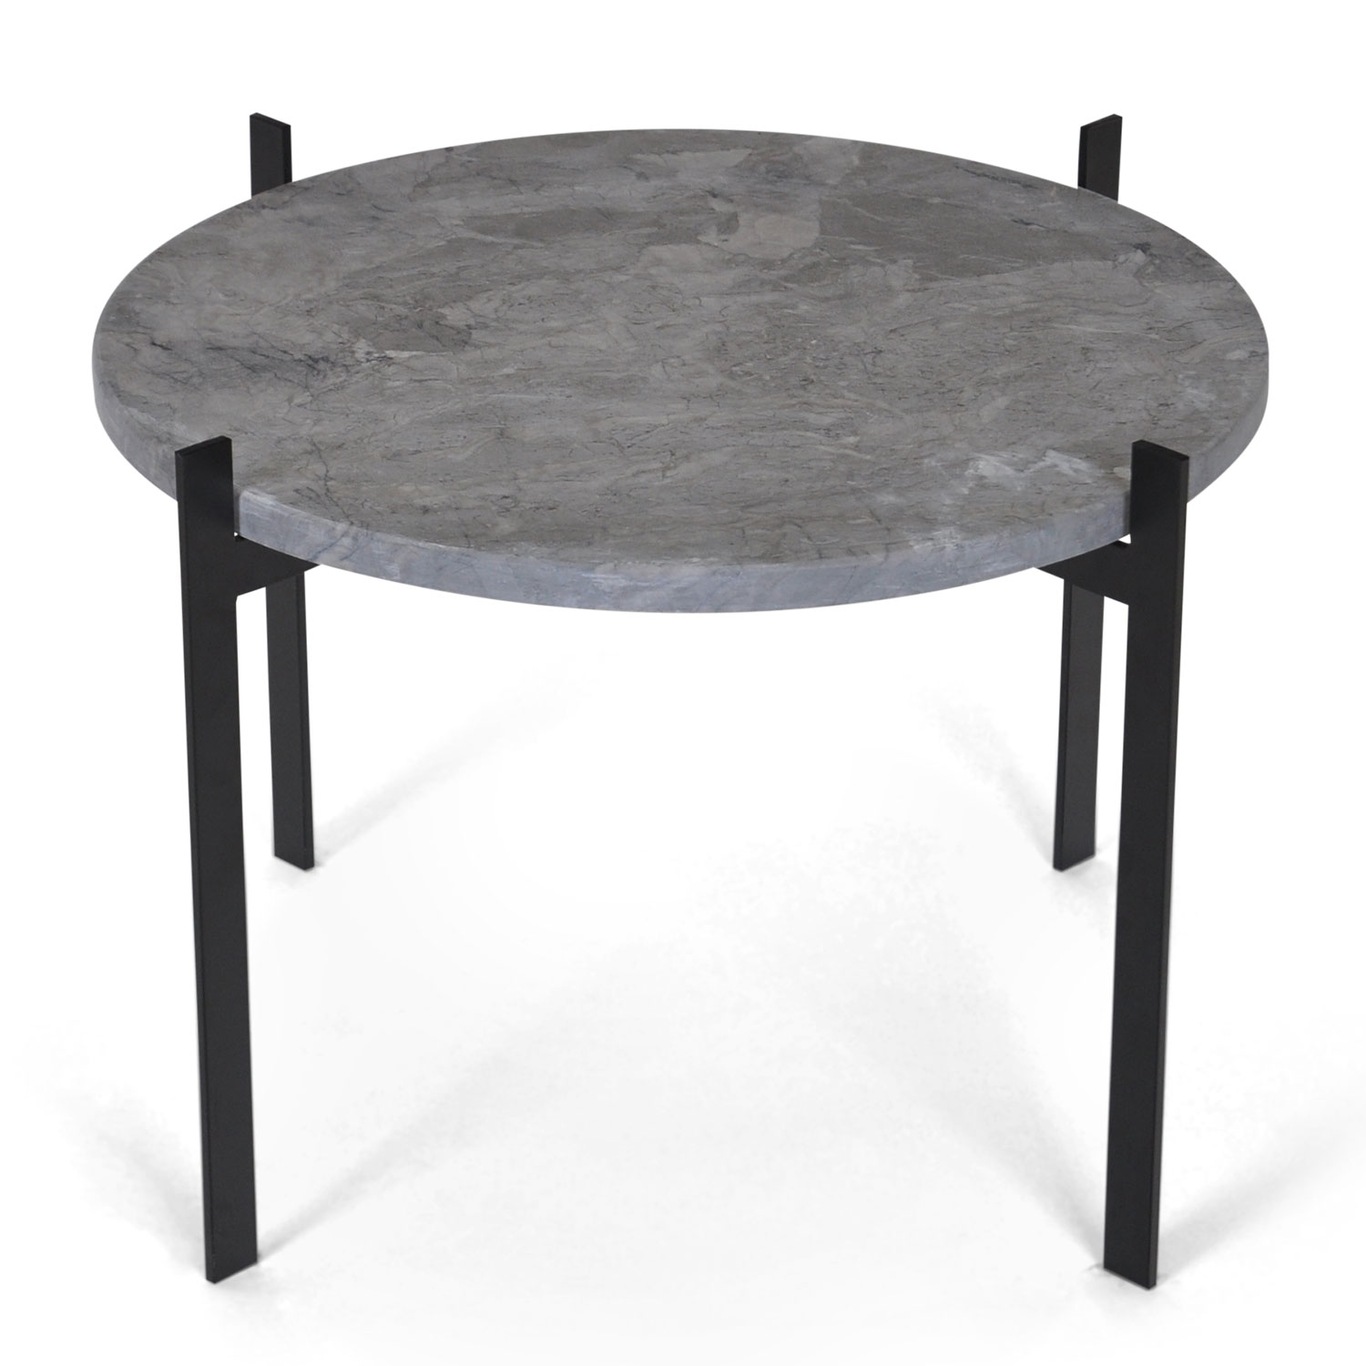 Single Deck Table, Black Base, Grey Marble